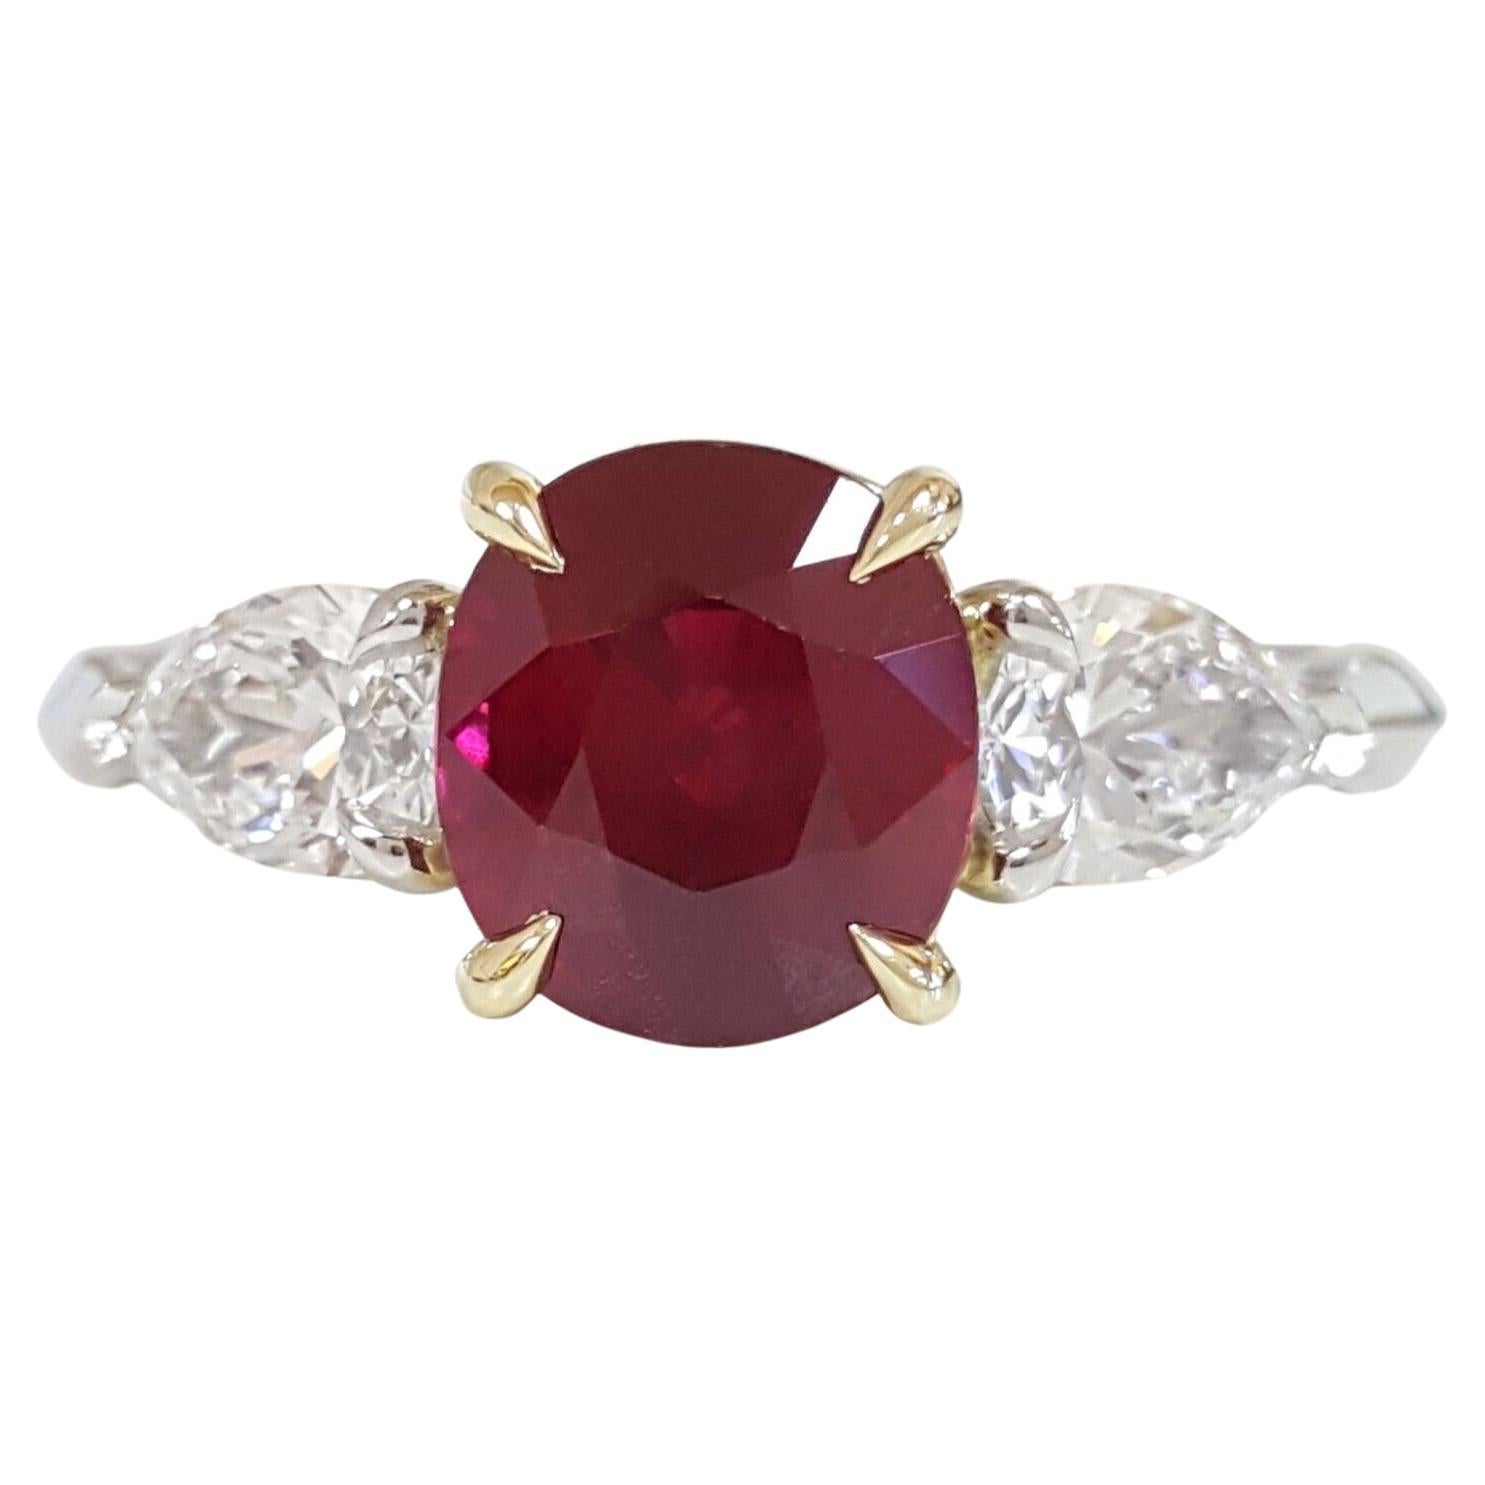 Authentic Tiffany & Co. Burma Ruby Diamond Halo Ring